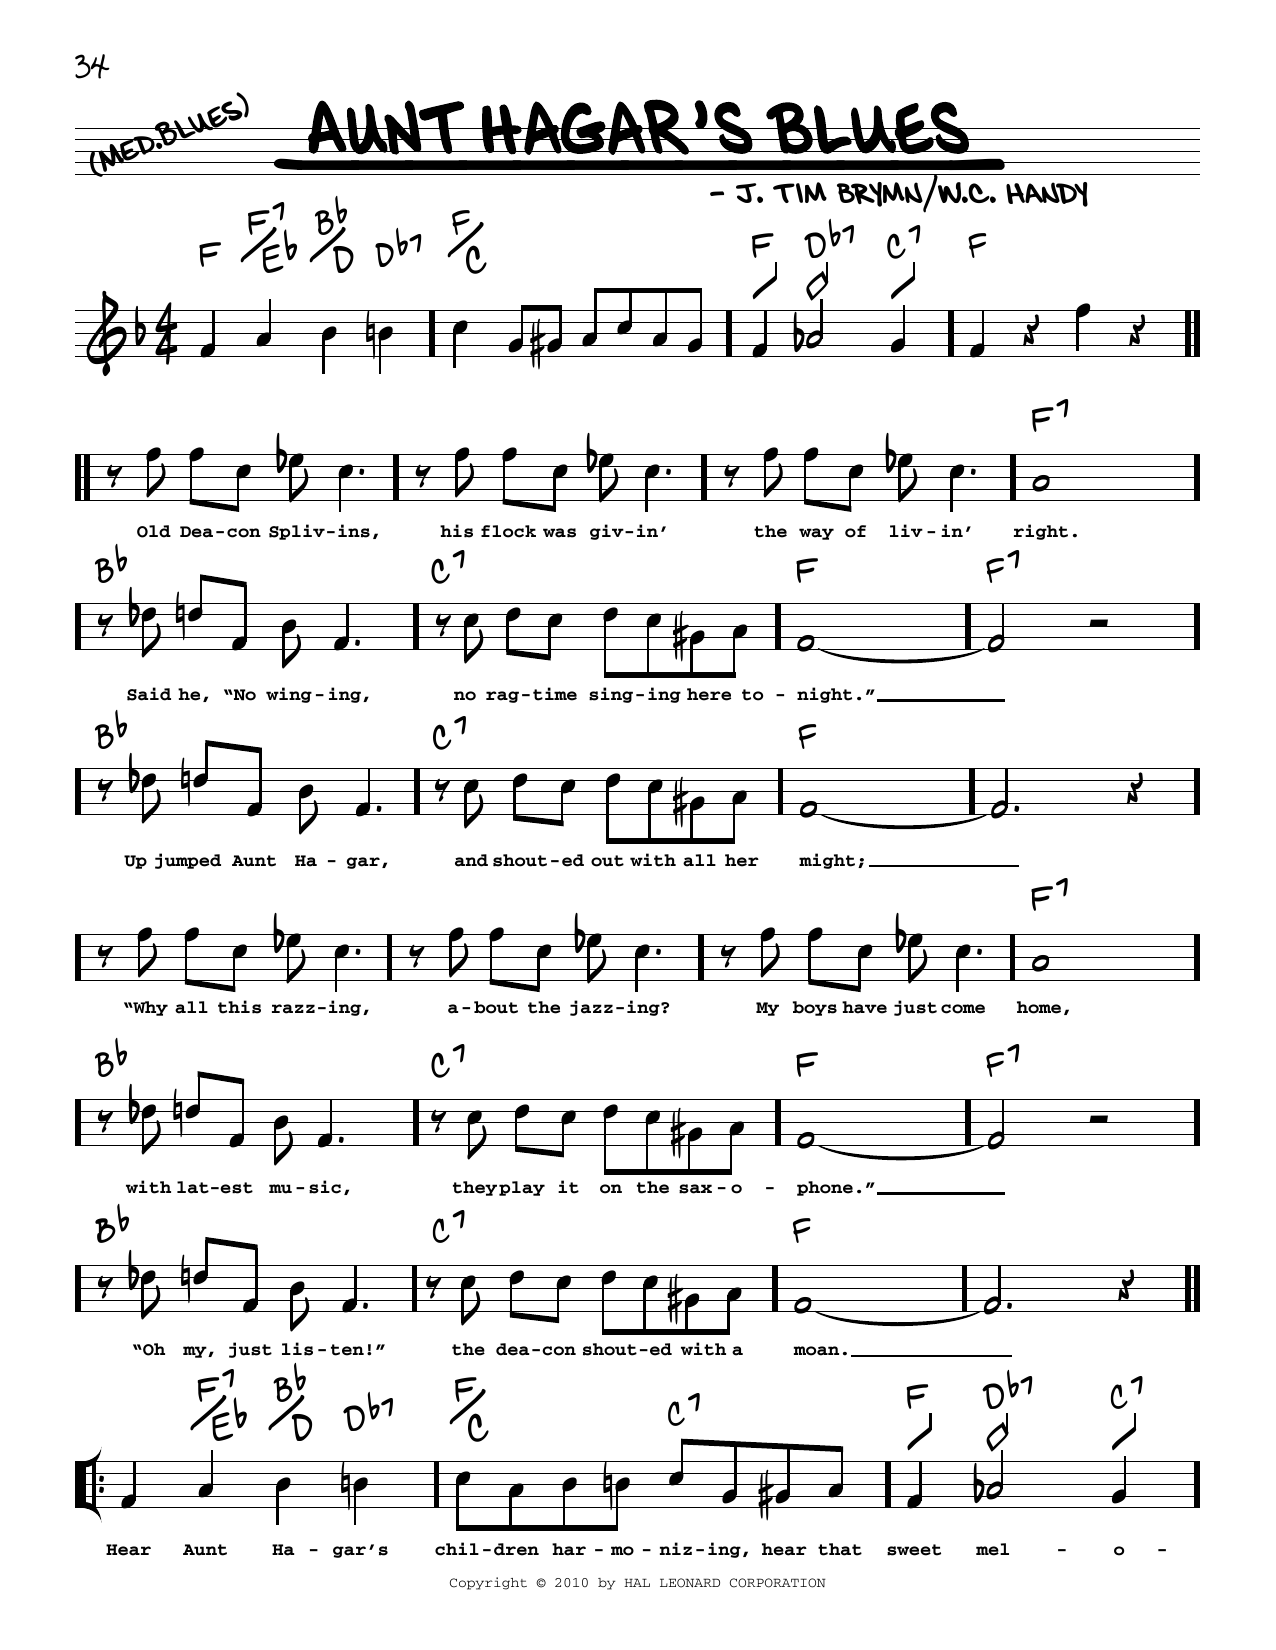 W.C. Handy Aunt Hagar's Blues (arr. Robert Rawlins) Sheet Music Notes & Chords for Real Book – Melody, Lyrics & Chords - Download or Print PDF